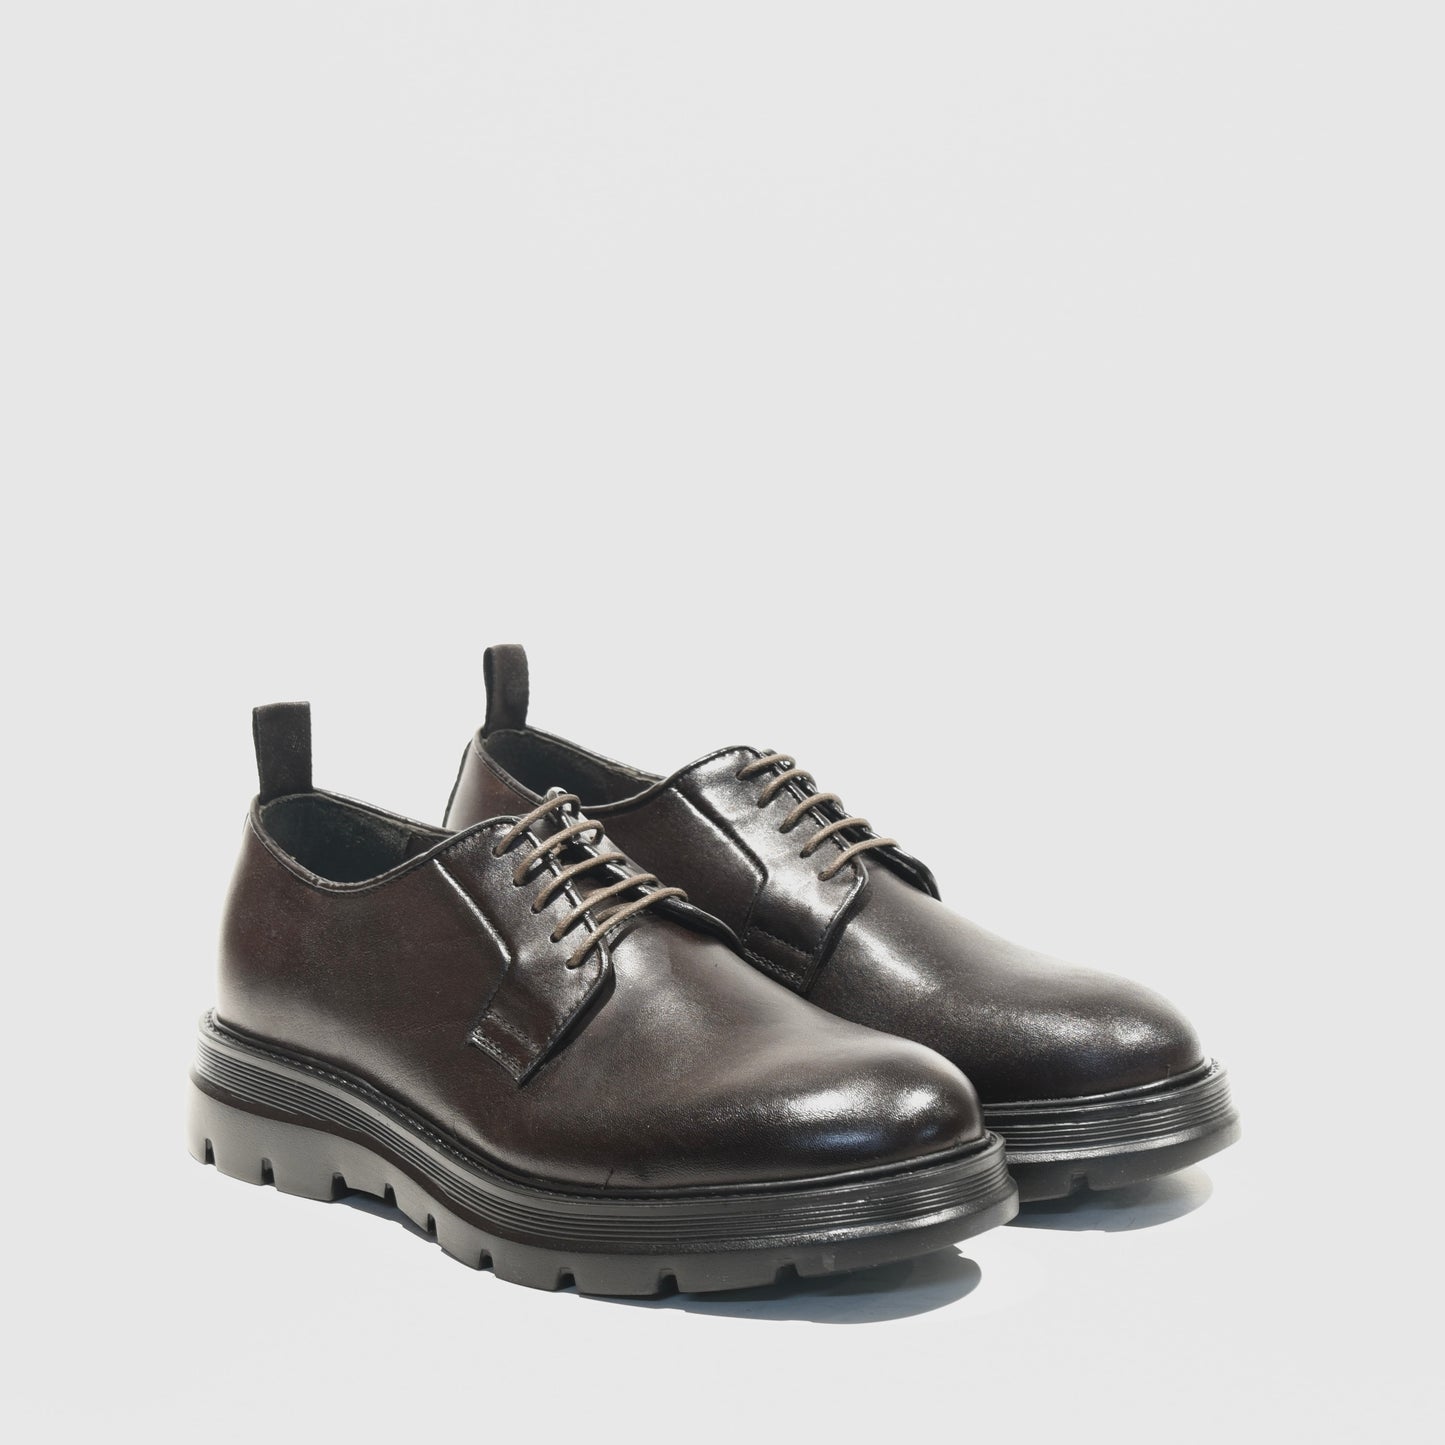 Kebo Italian shoes for men in brown